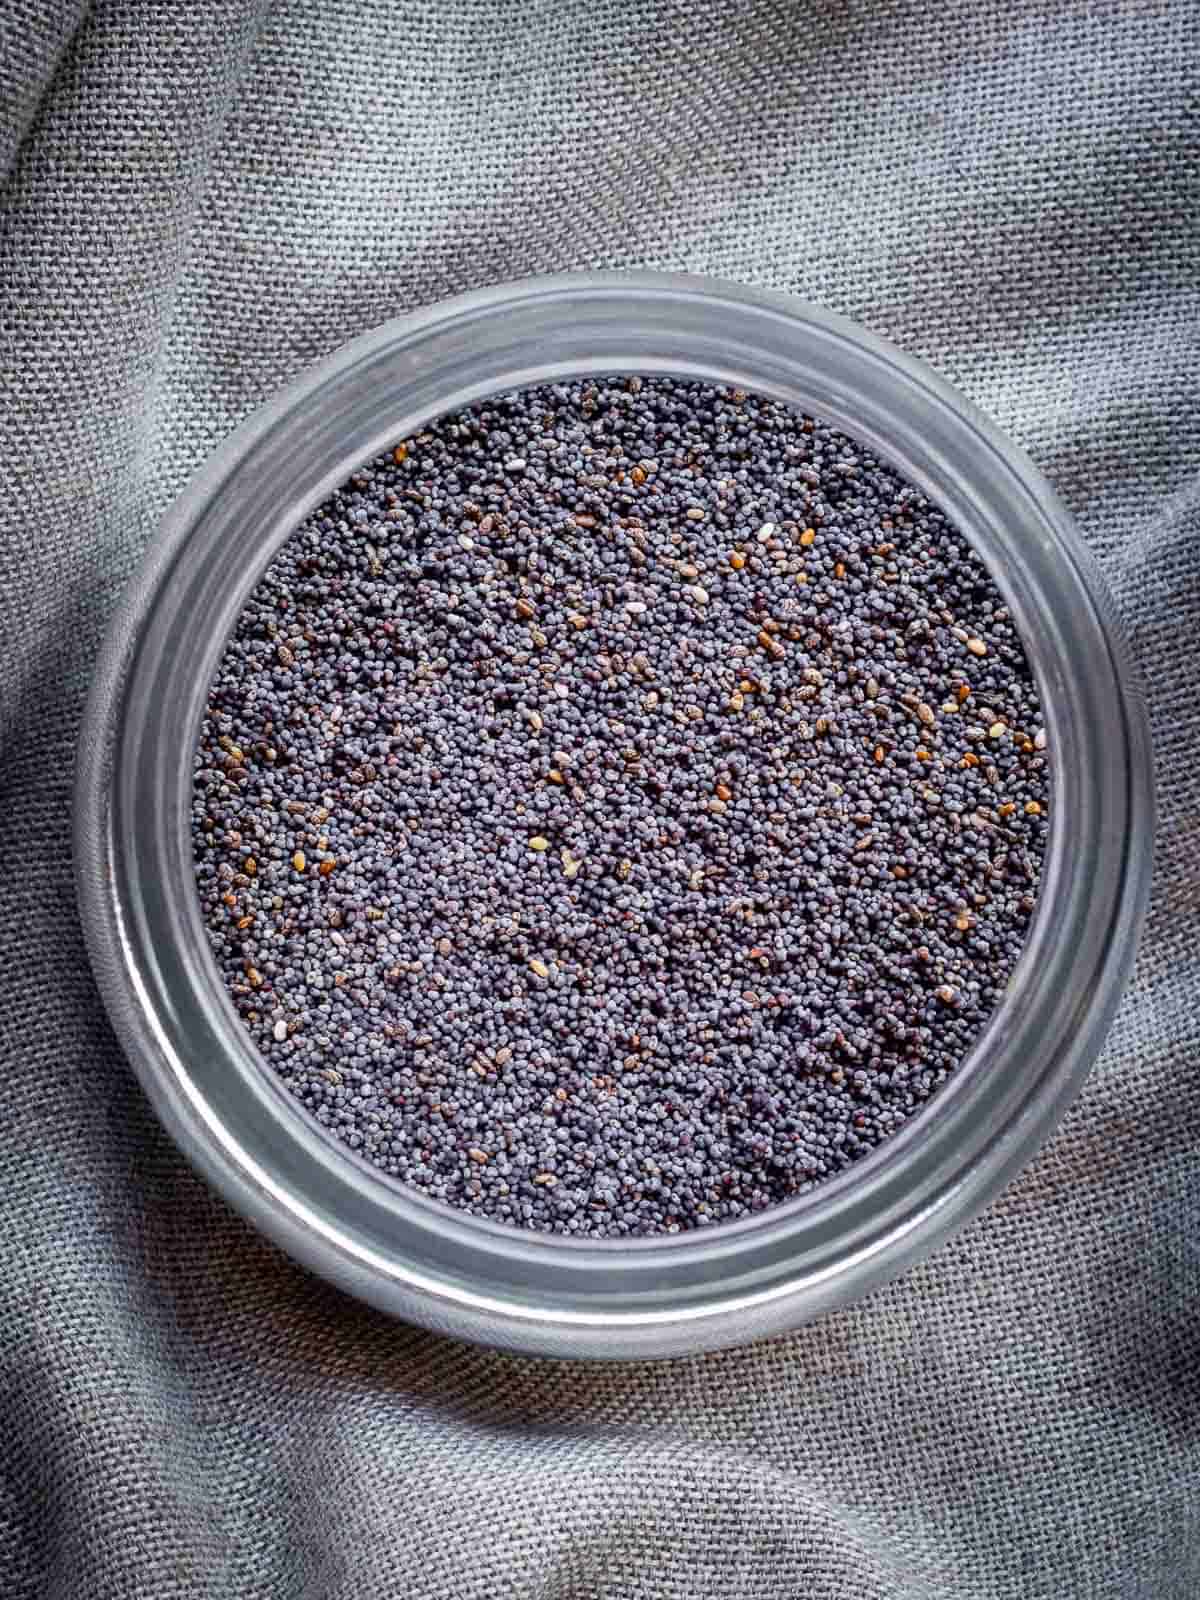 Chia seeds Jar